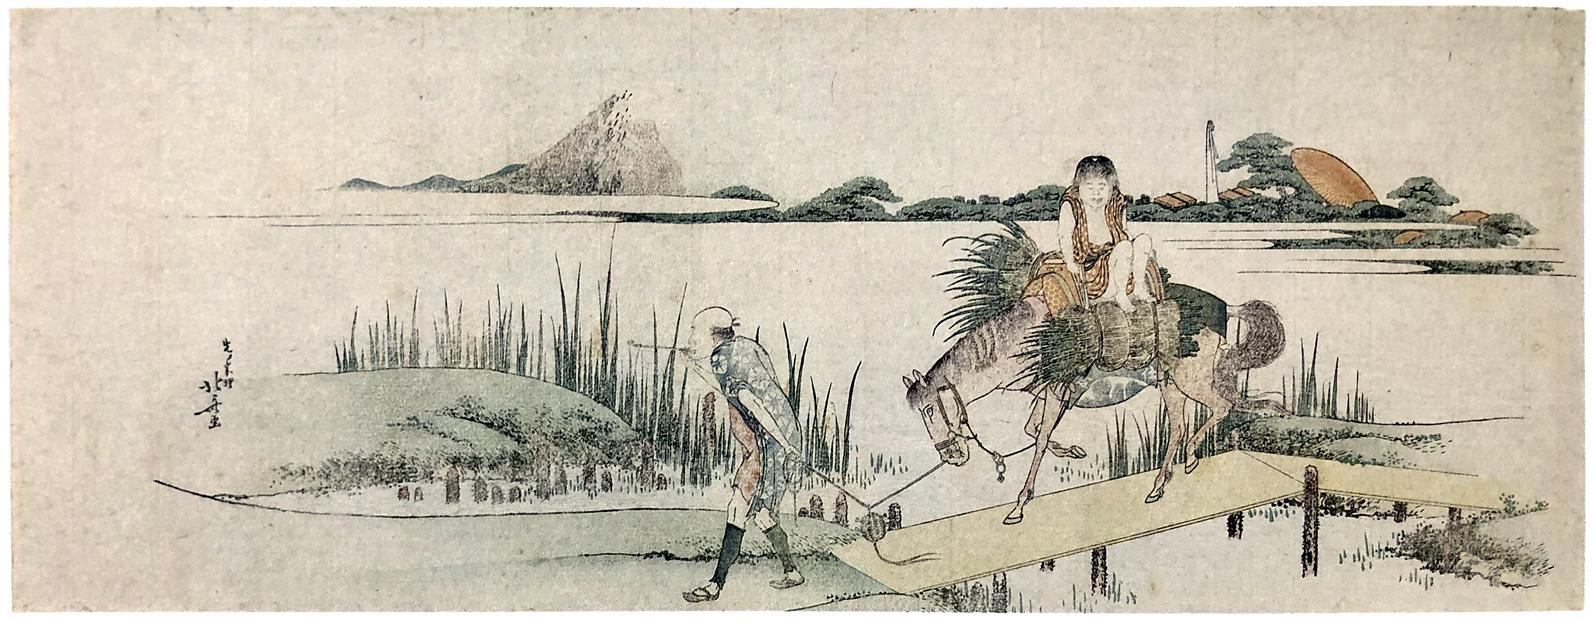 Hokusai - Farmer and Child on Horse Crossing a Bridge - Long Surimono